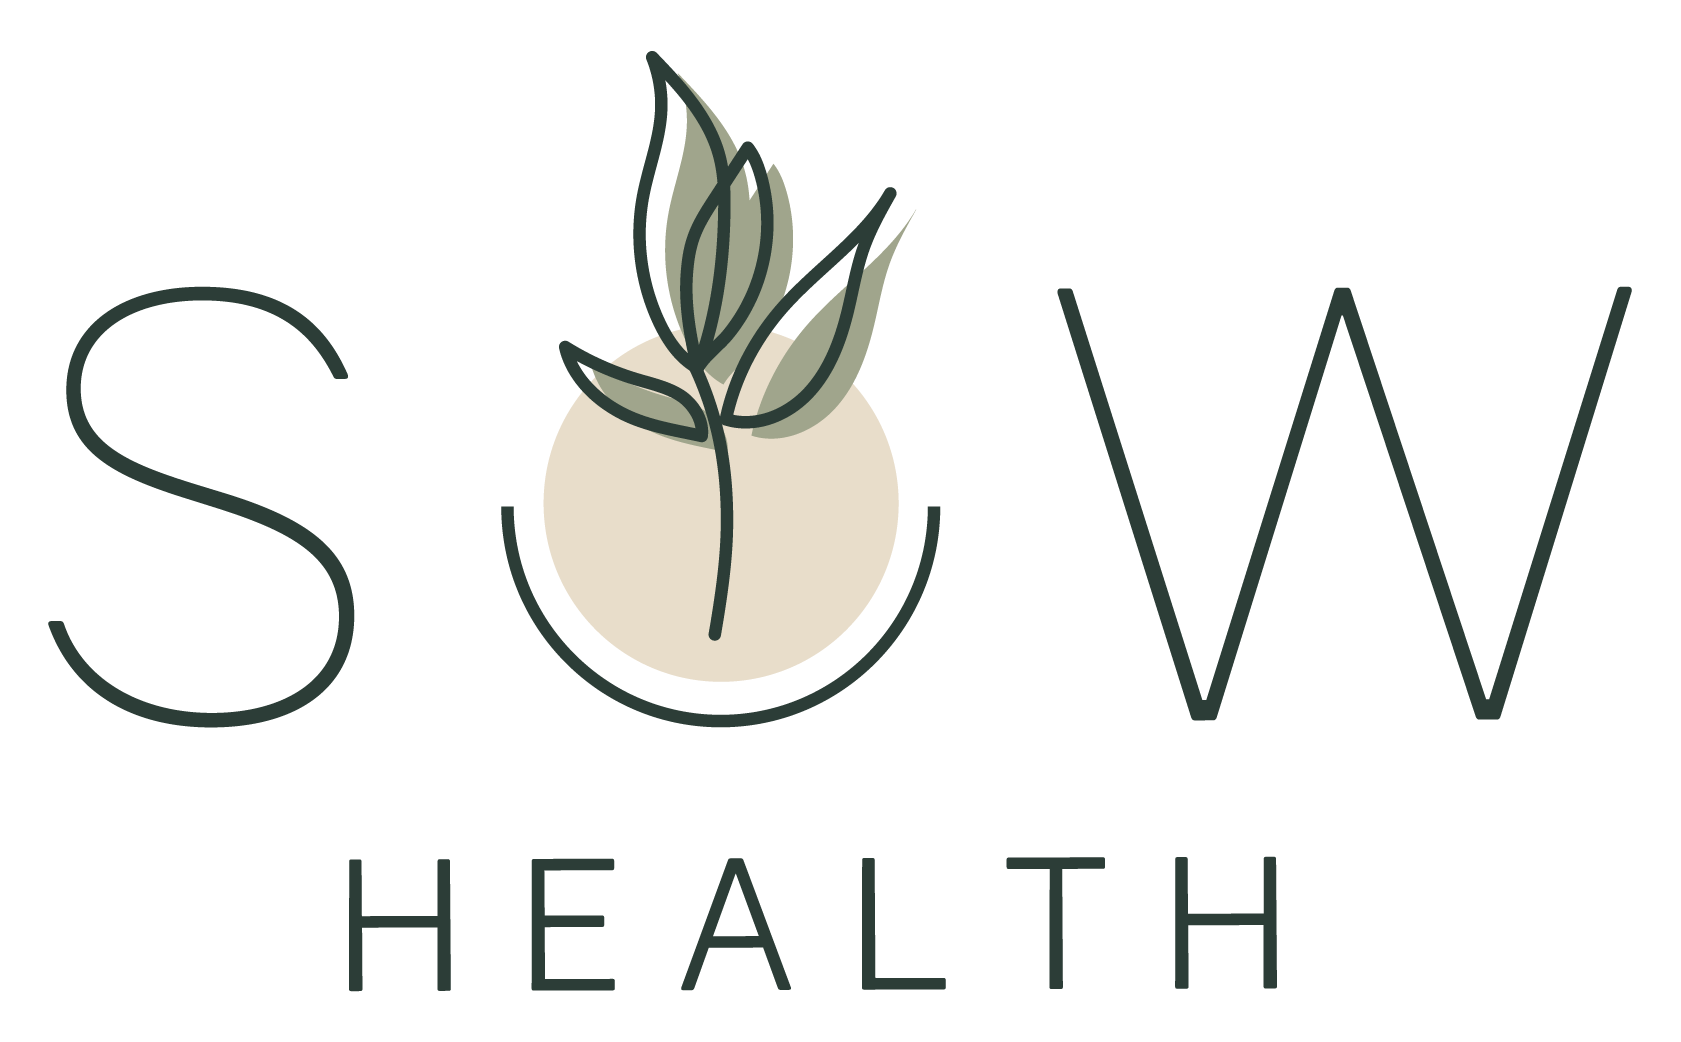 Sow Health Logo